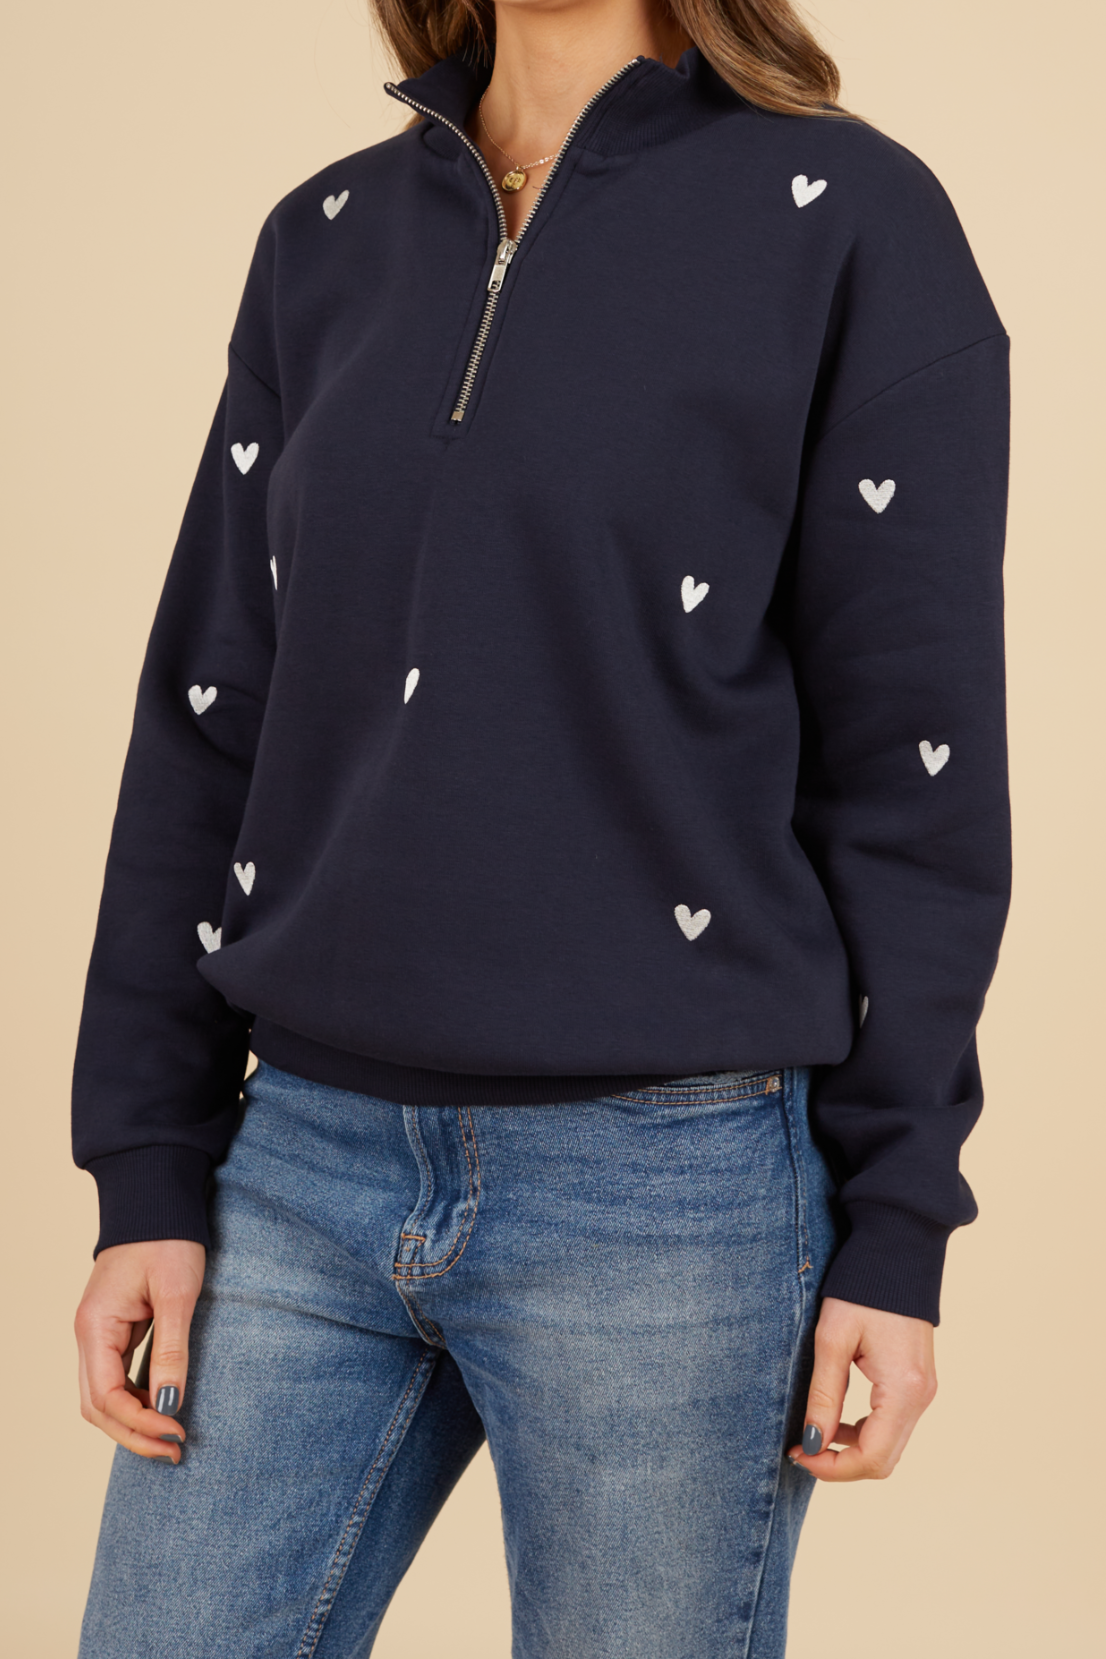 O&F Navy Heart Embroidered Half Zip Sweatshirt